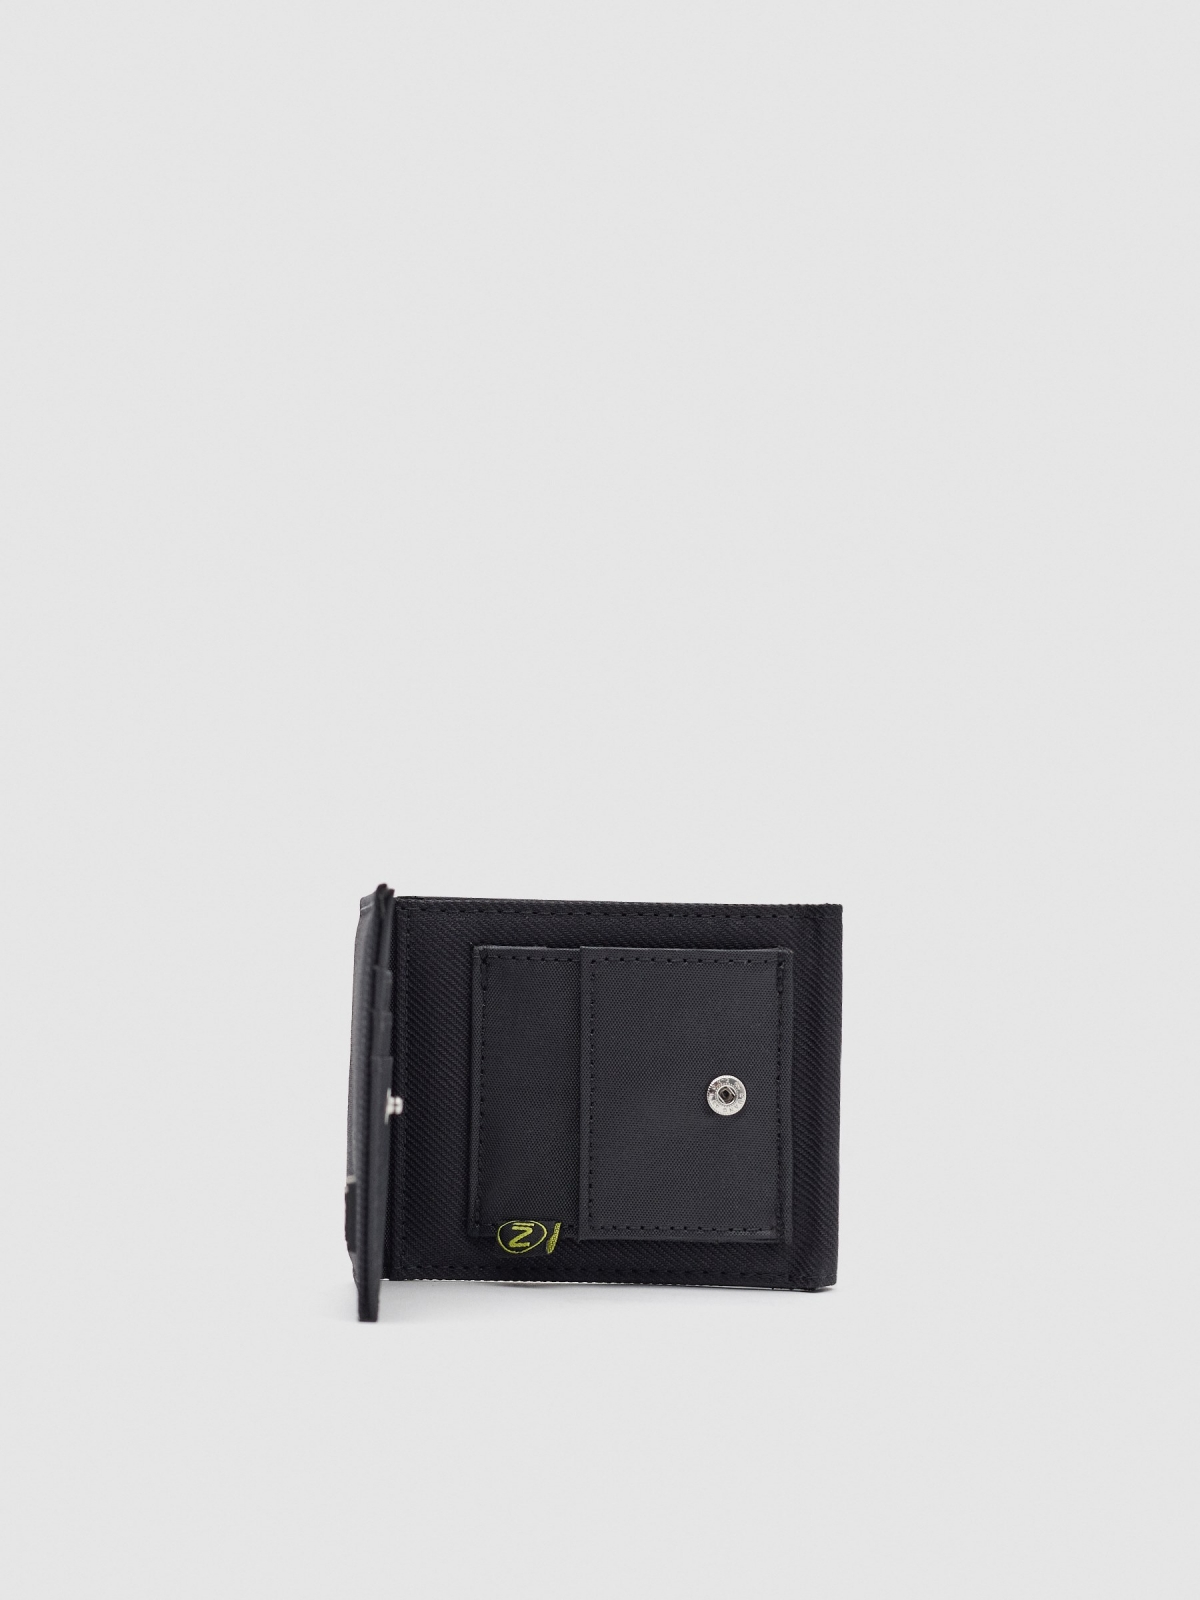 Basic nylon wallet black detail view